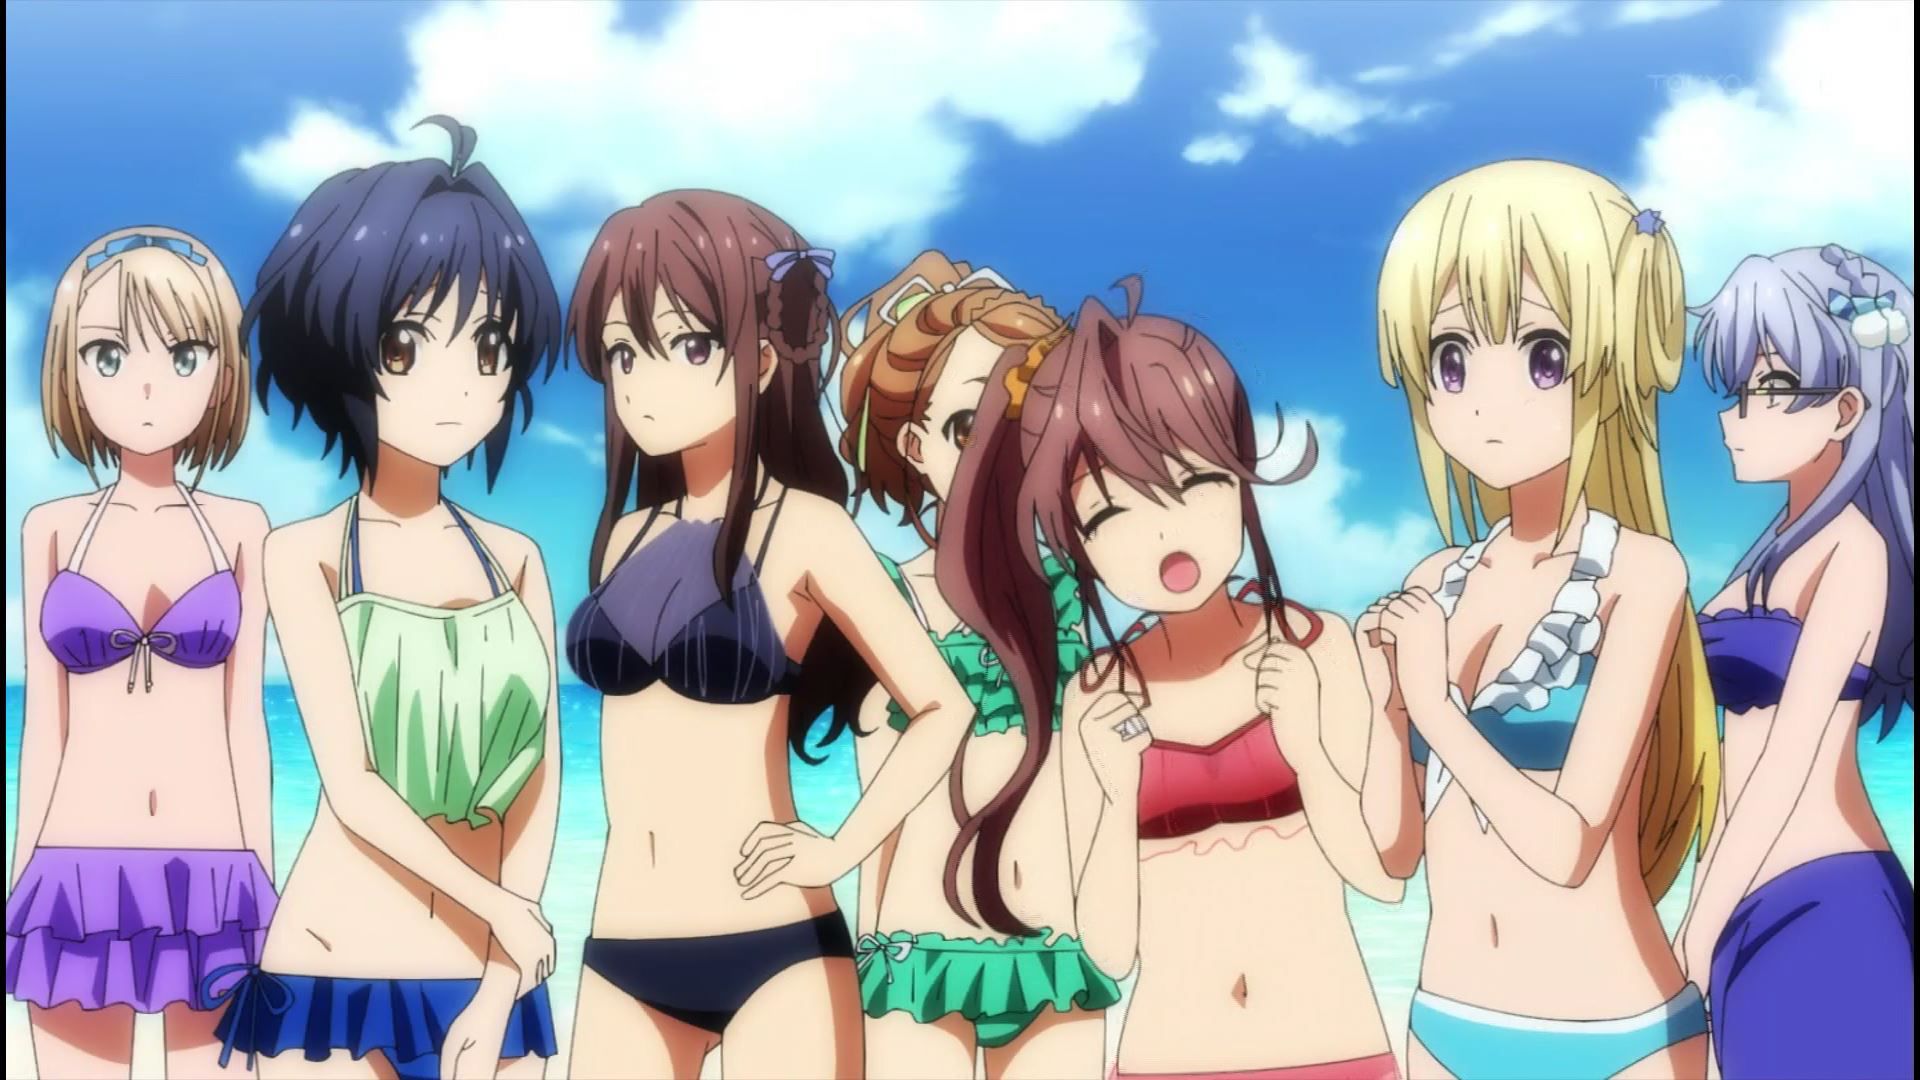 Anime [22/7 (Nanabun Nonijuuni)] 6 episodes erotic scene of girls erotic swimsuit! 19